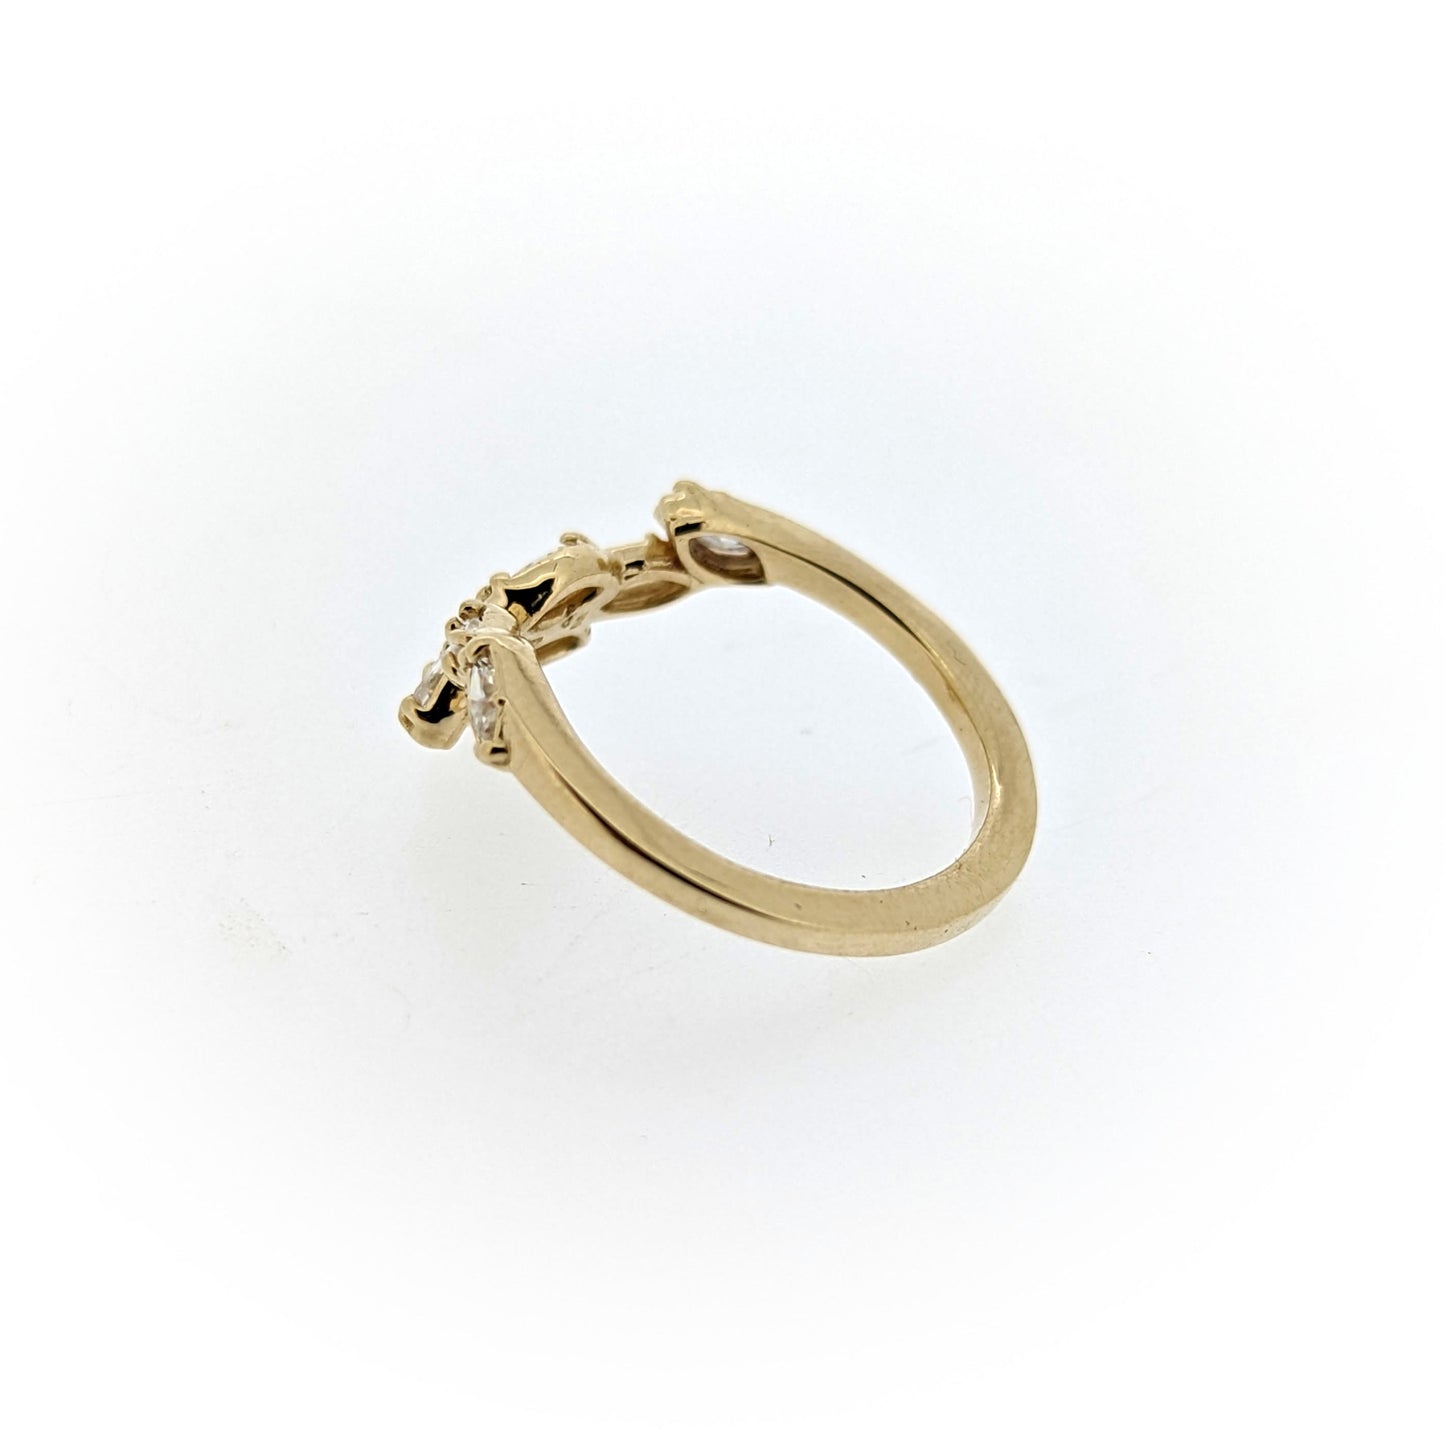 Artemis Diamond or Moissanite Shadow Band Ring